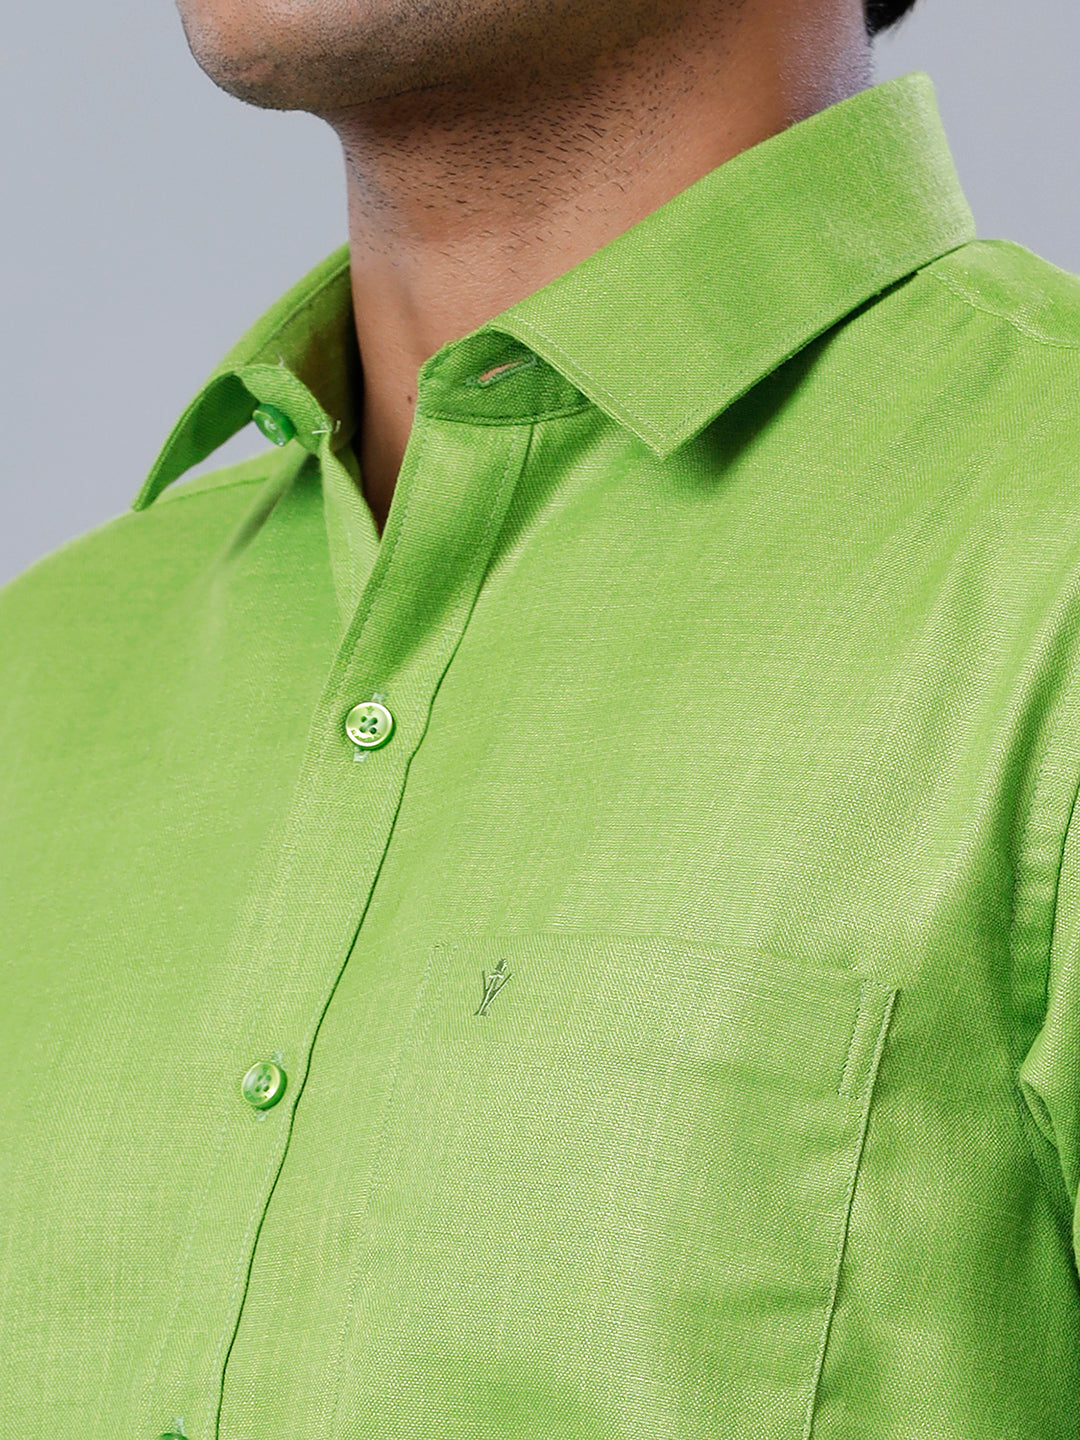 Mens Formal Shirt Full Sleeves Parrot Green T41 TQ8-Zoom view